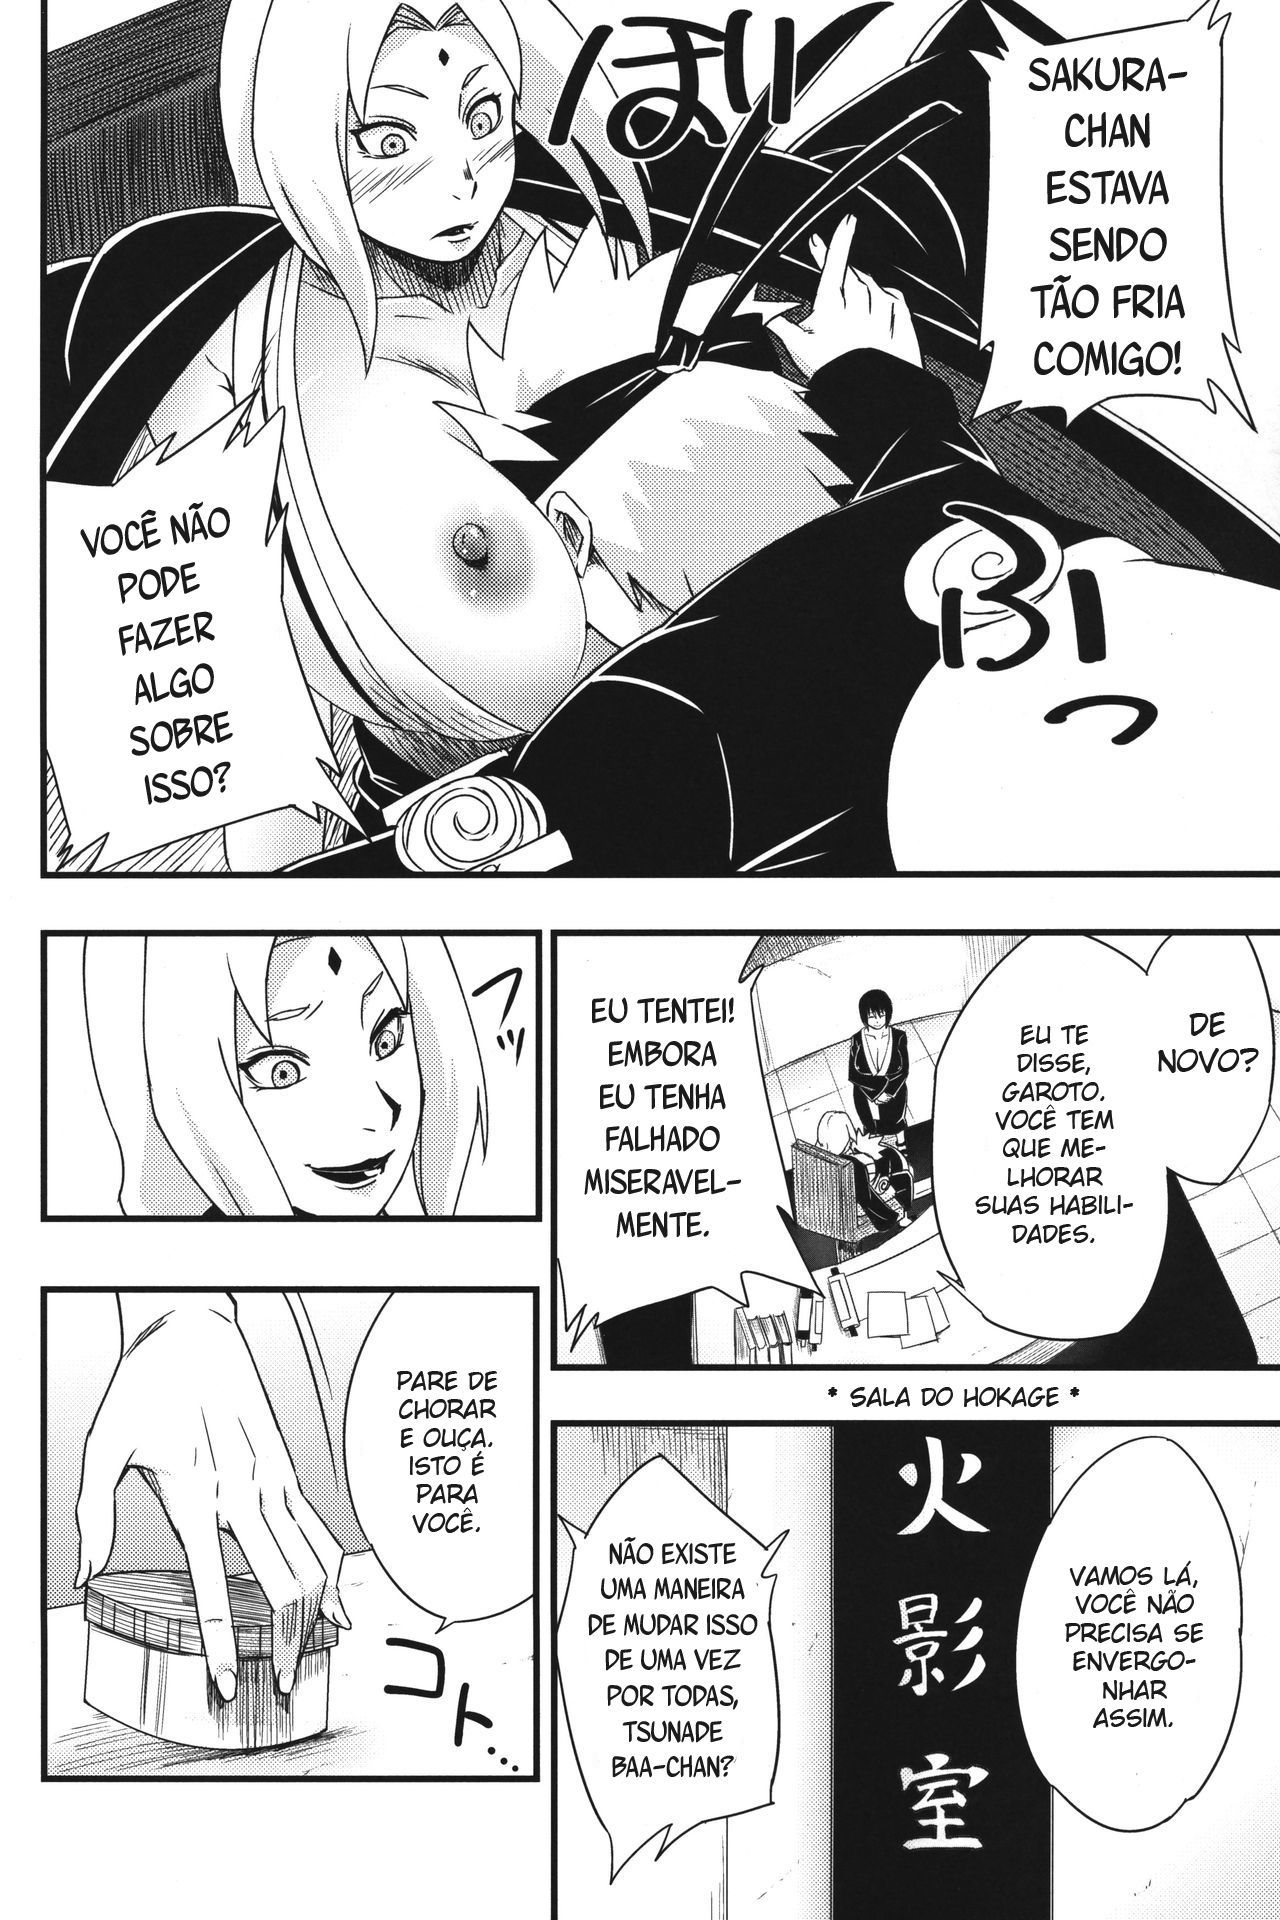 Naruto dando orgasmo as ninjas de Konaha